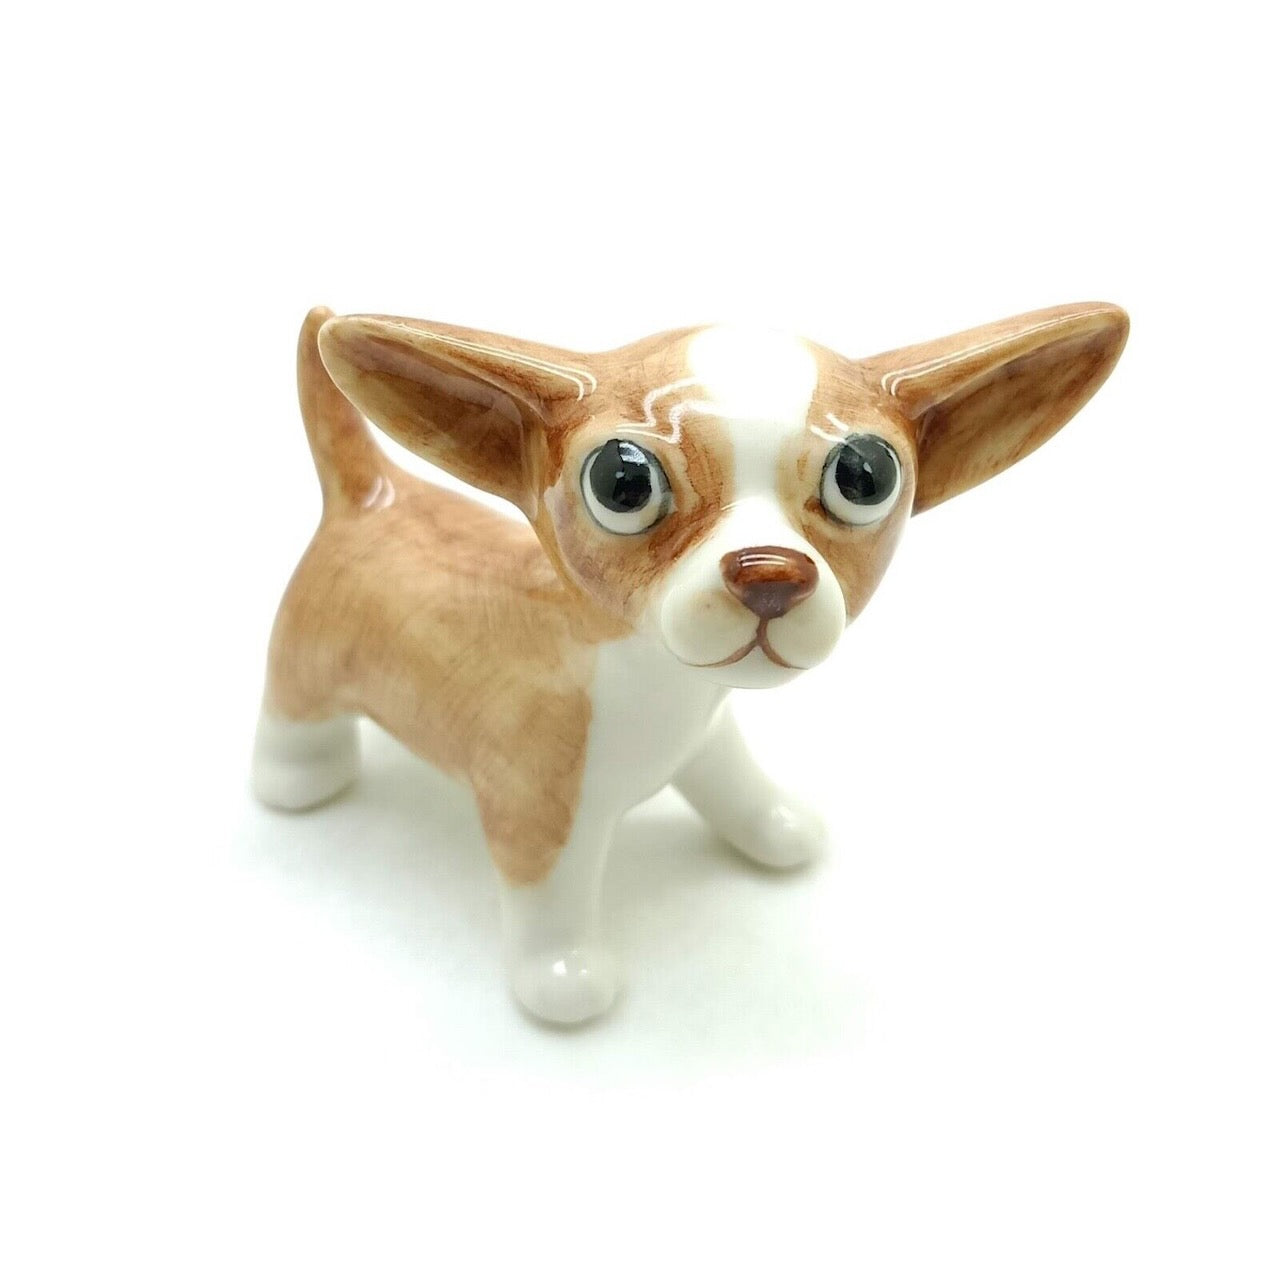 Chihuahua Dog Ceramic Figurine